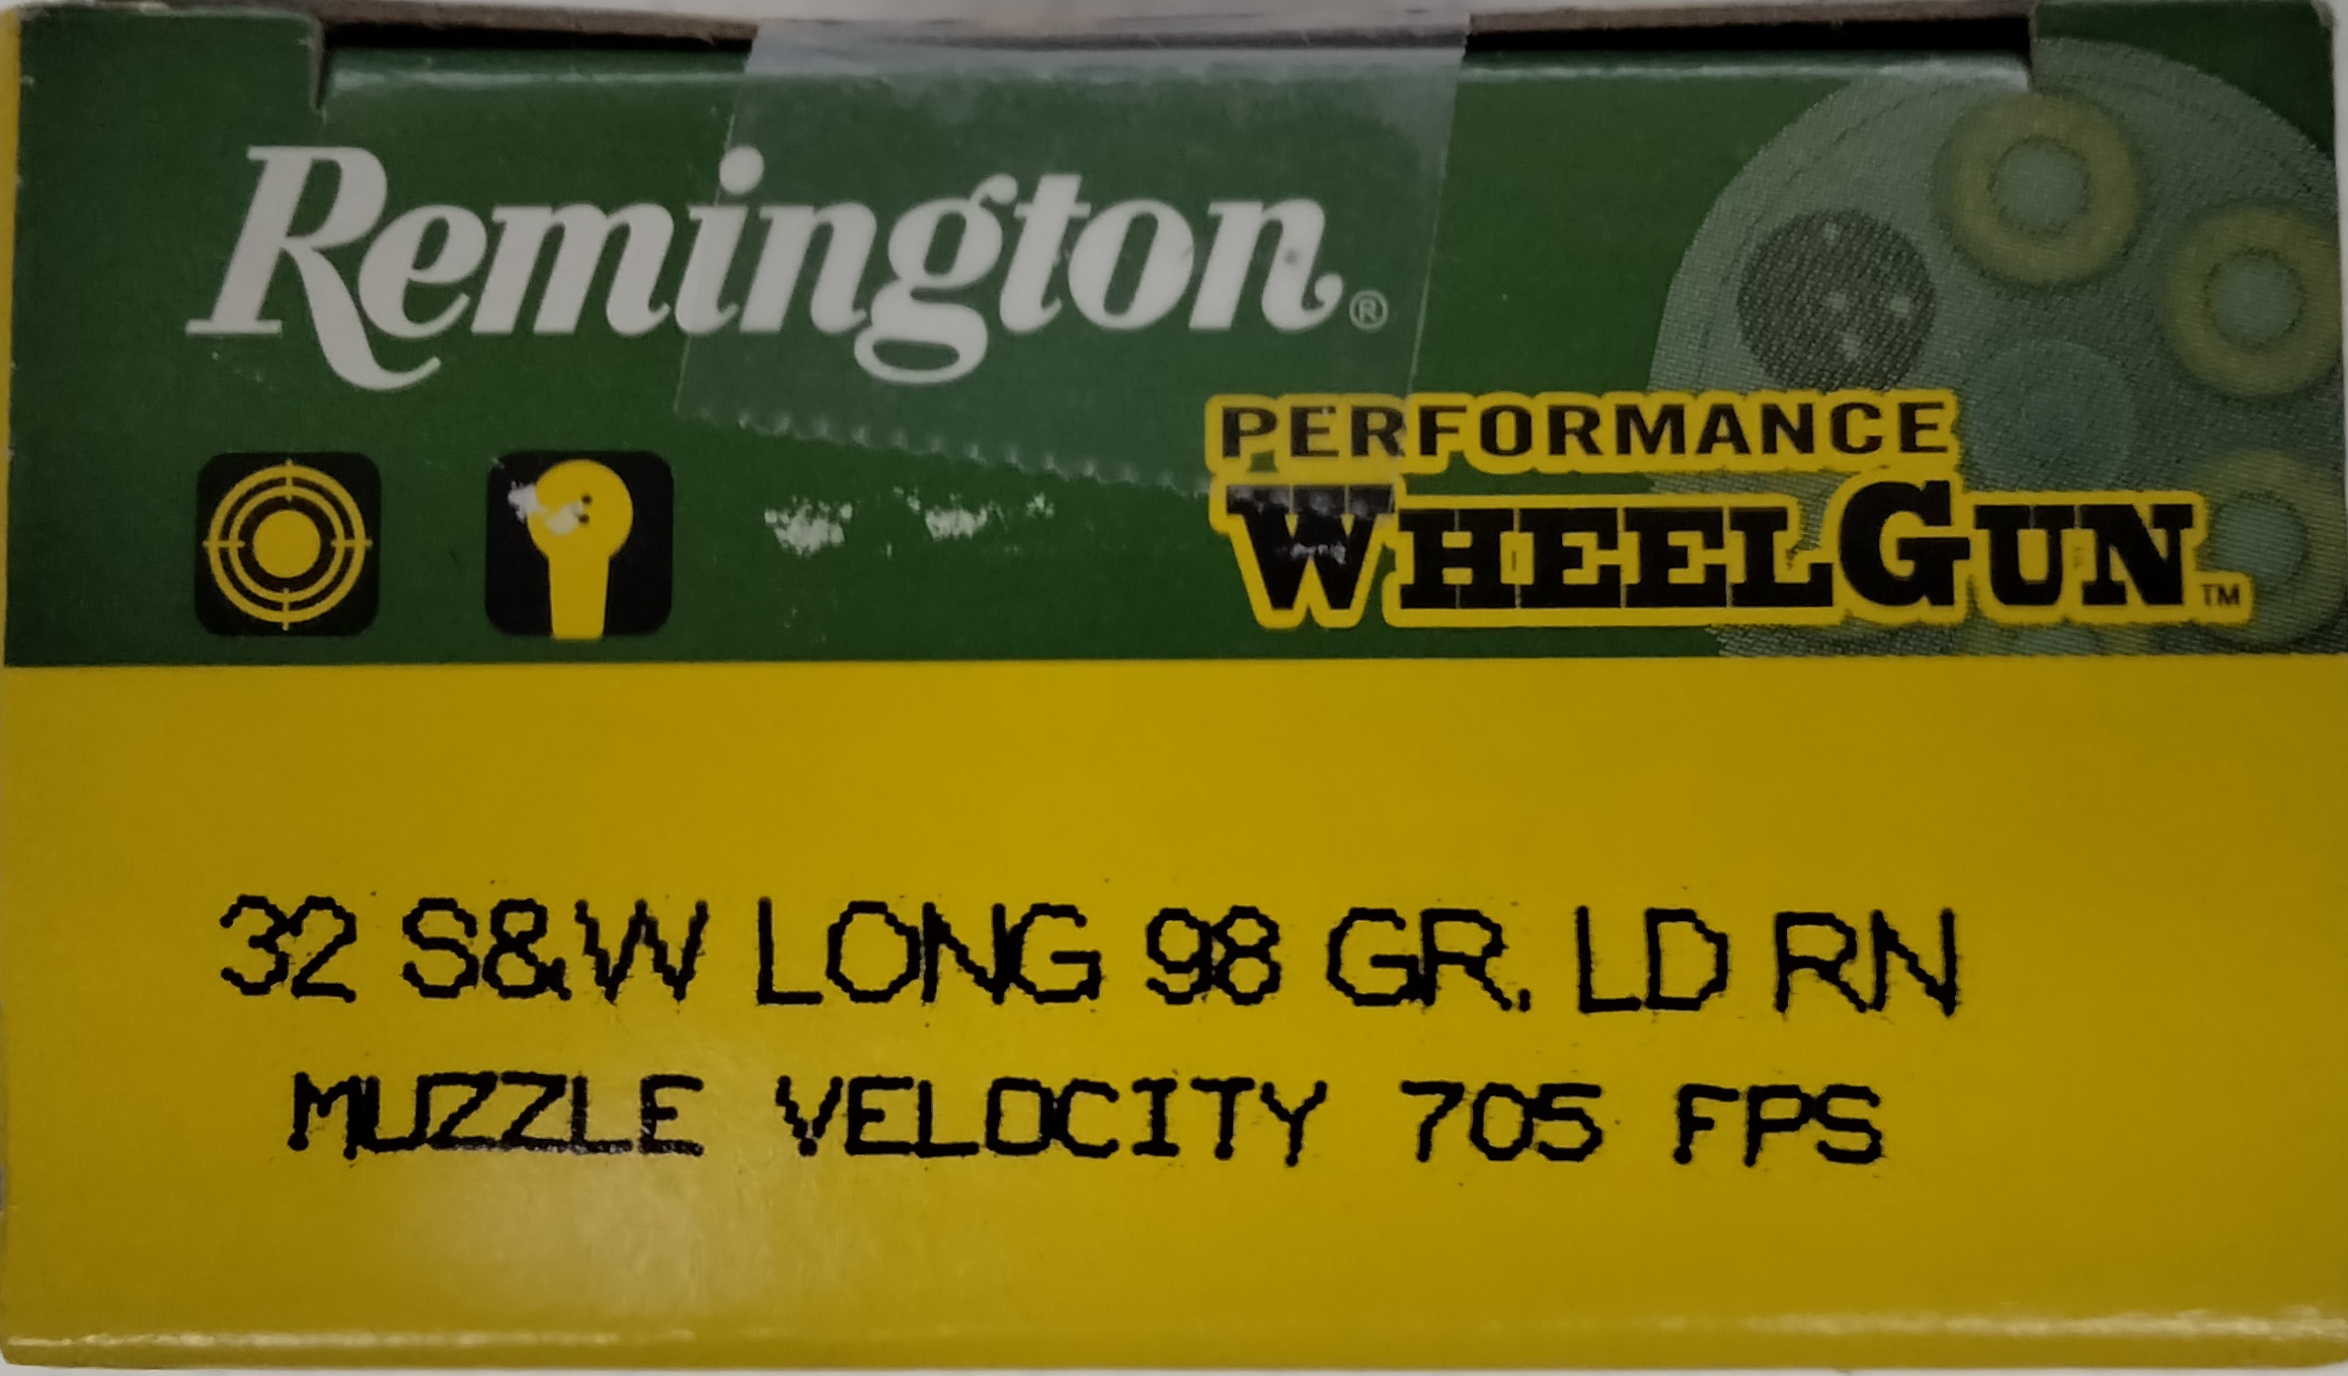 32 S&W Long Remington Performance Wheelgun 98 gr. Lead Round Nose LRN 500 rnds 705 fps (10 boxes) Brass M-ID: 22210/RPW32SWL UPC: 047700478104